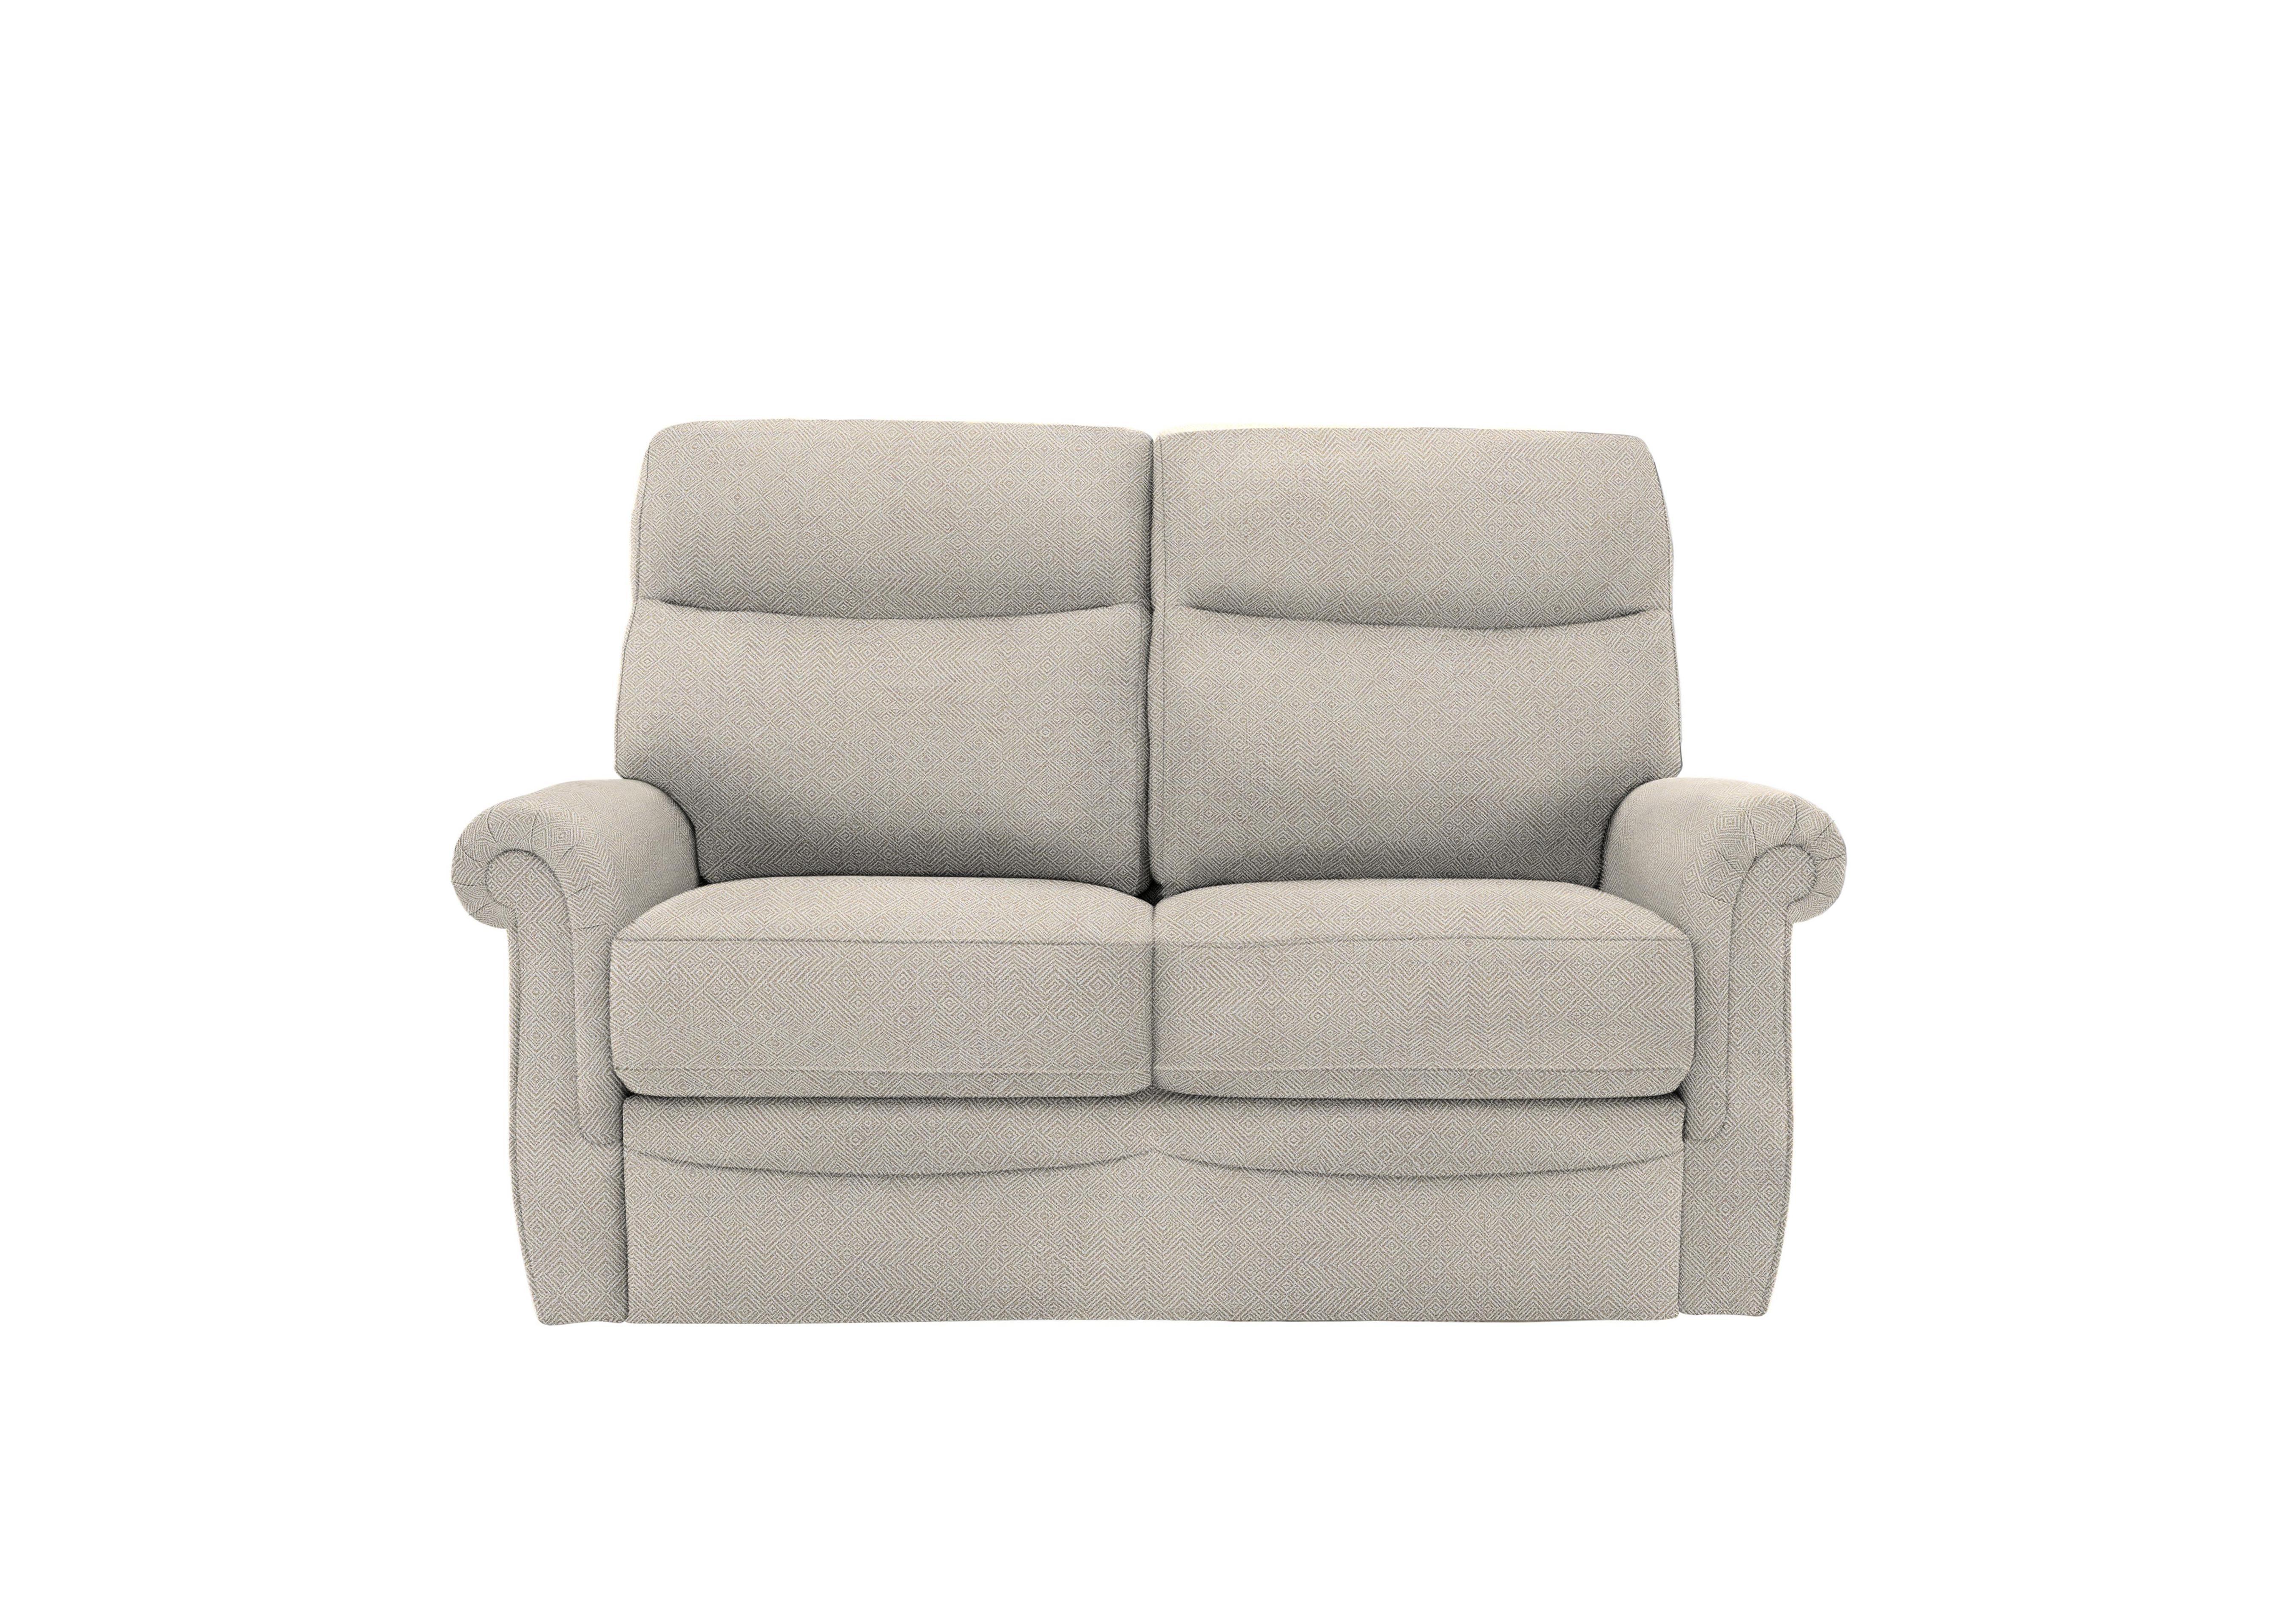 Avon Small 2 Seater Fabric Sofa in B011 Nebular Blush on Furniture Village